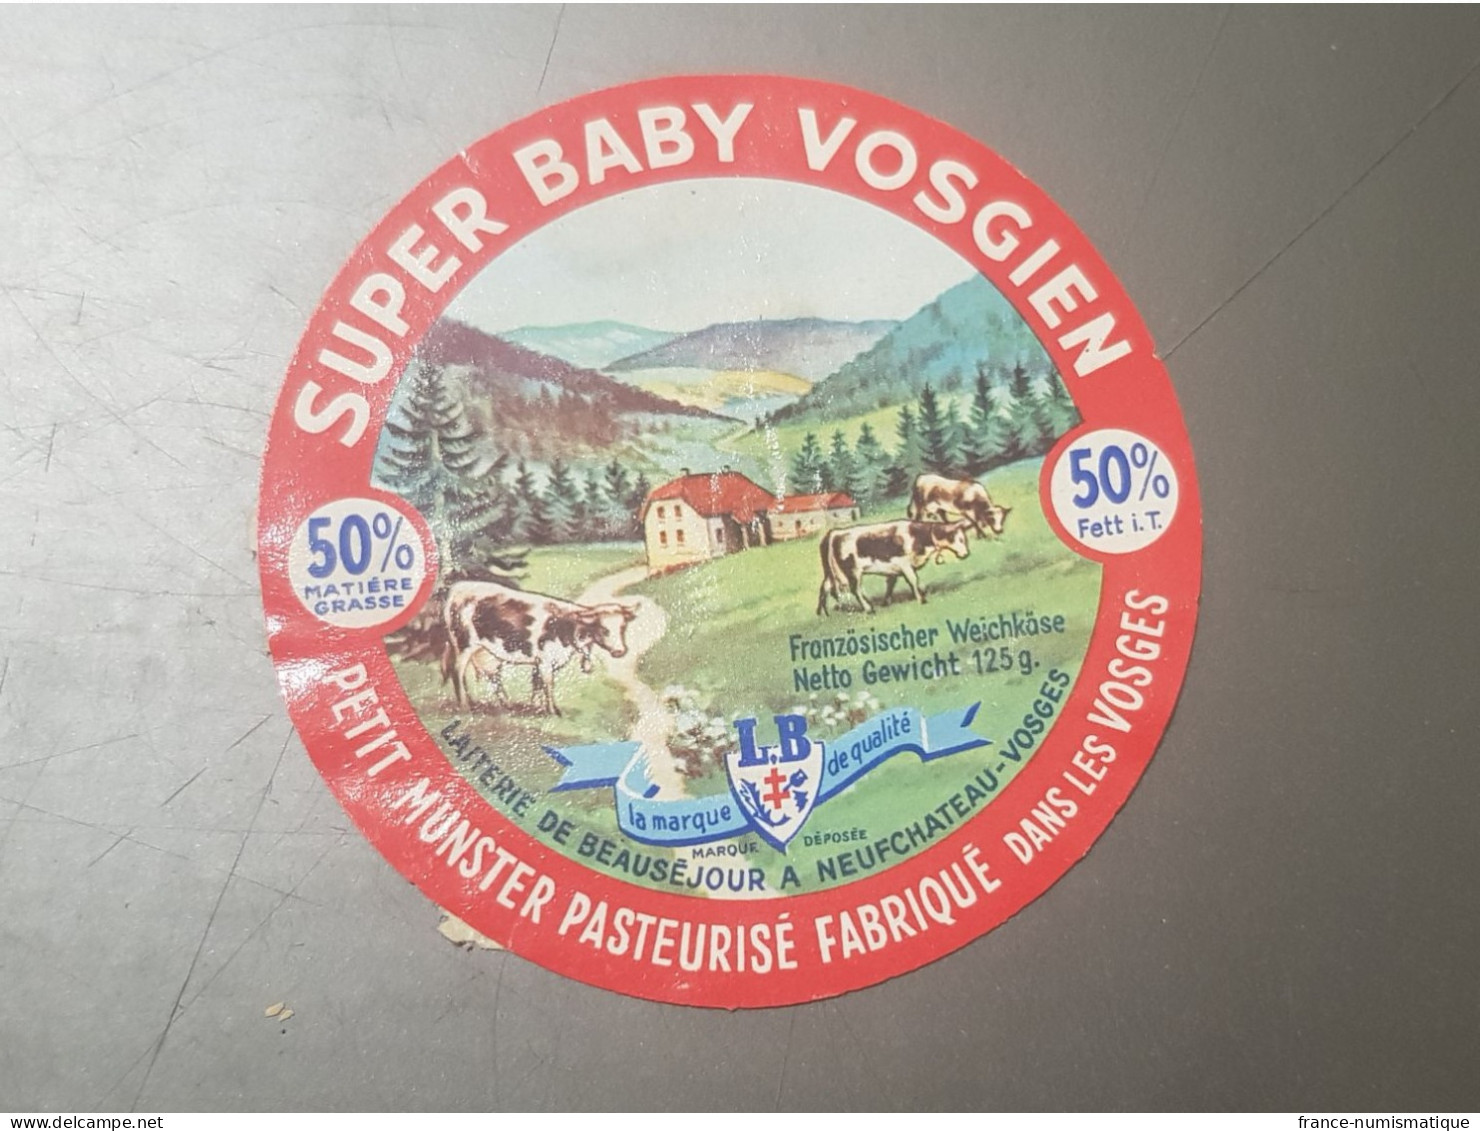 Etiquette De Petit Camembert: SUPER BABY VOSGIEN - Quesos